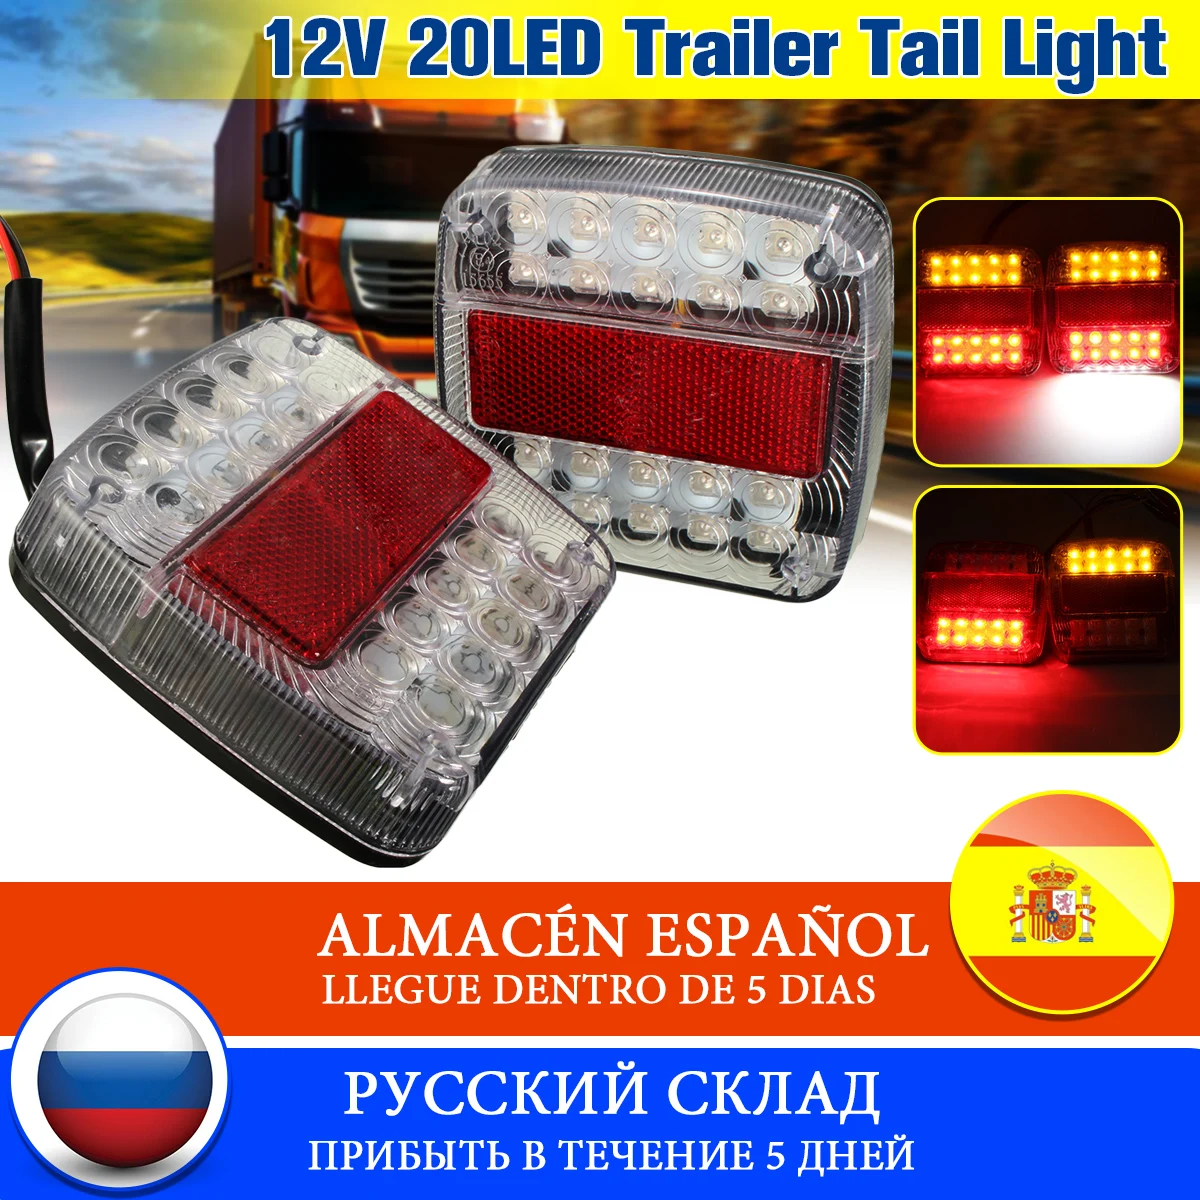 

2x 46 LED car truck tail light warning light tail light waterproof tail light rear turn license plate light for Trailer Tr